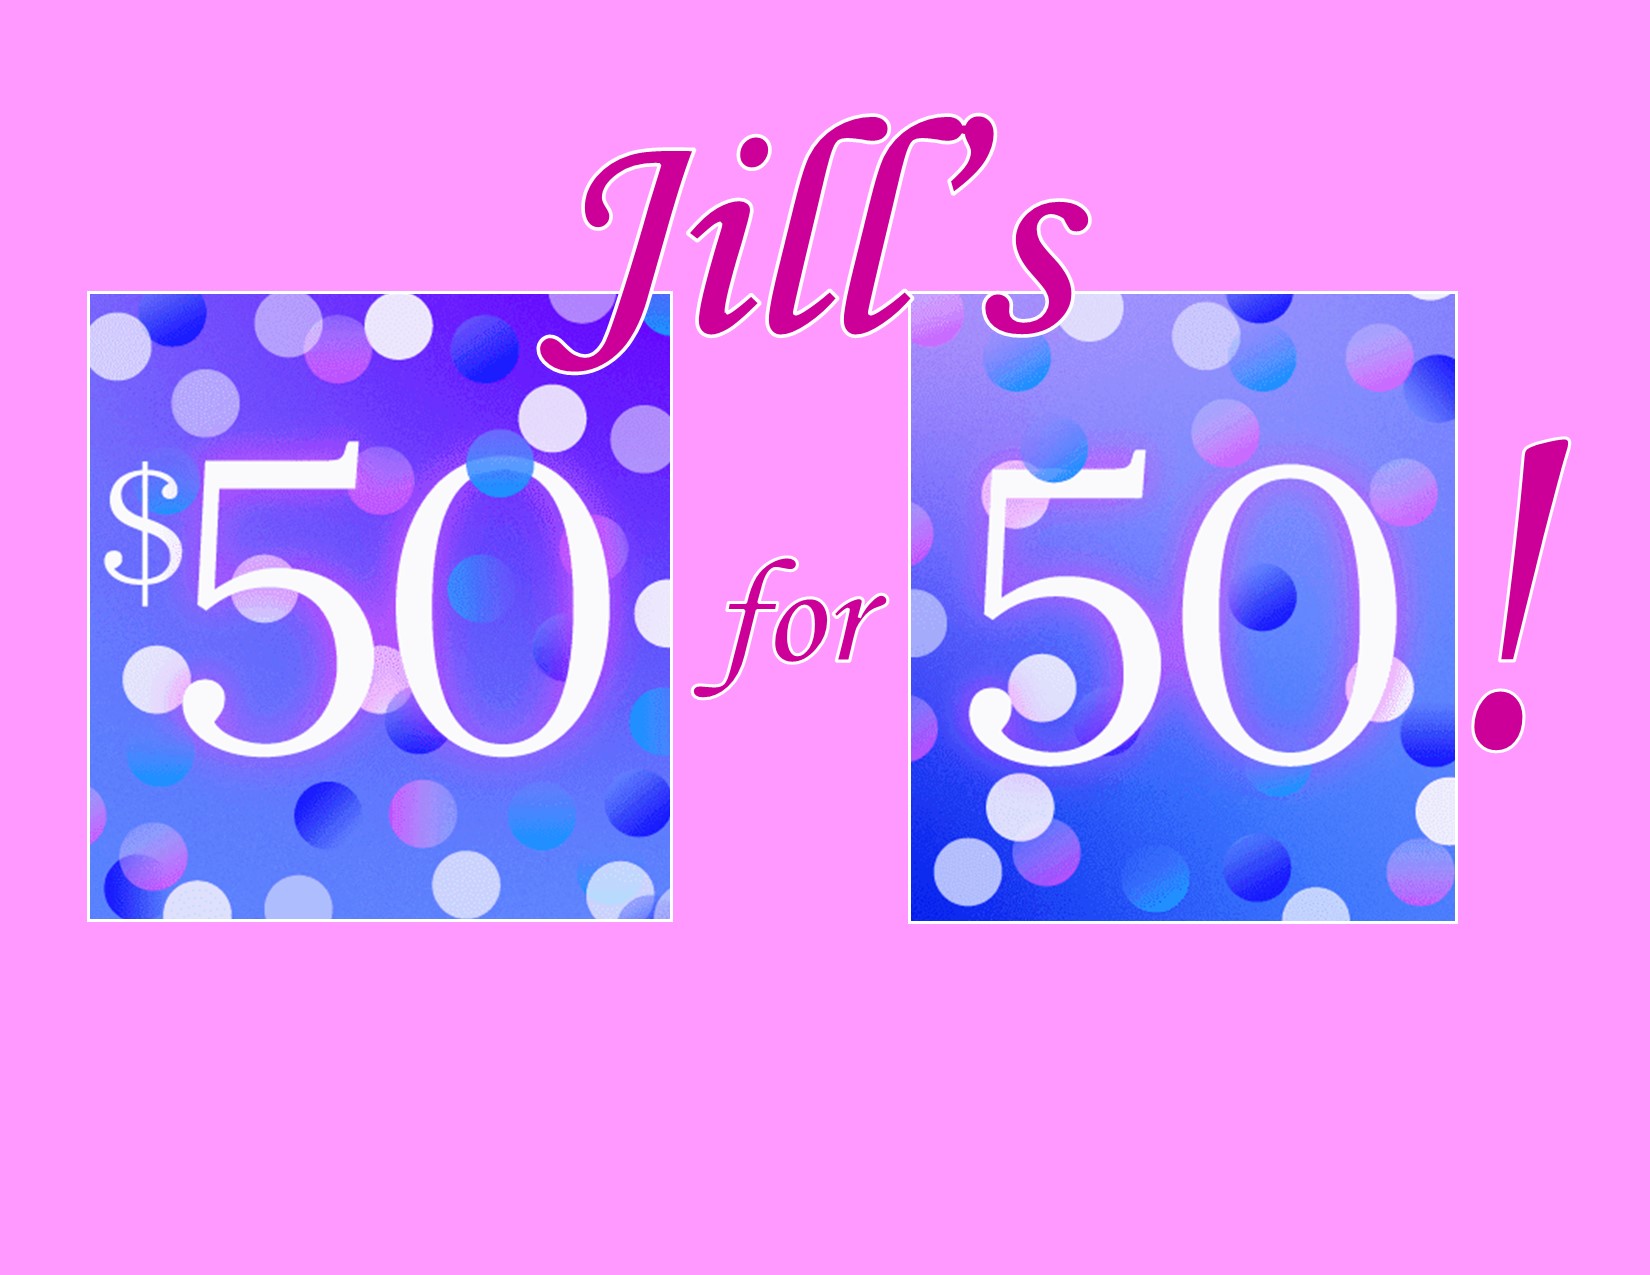 Jill’s $50 for 50!